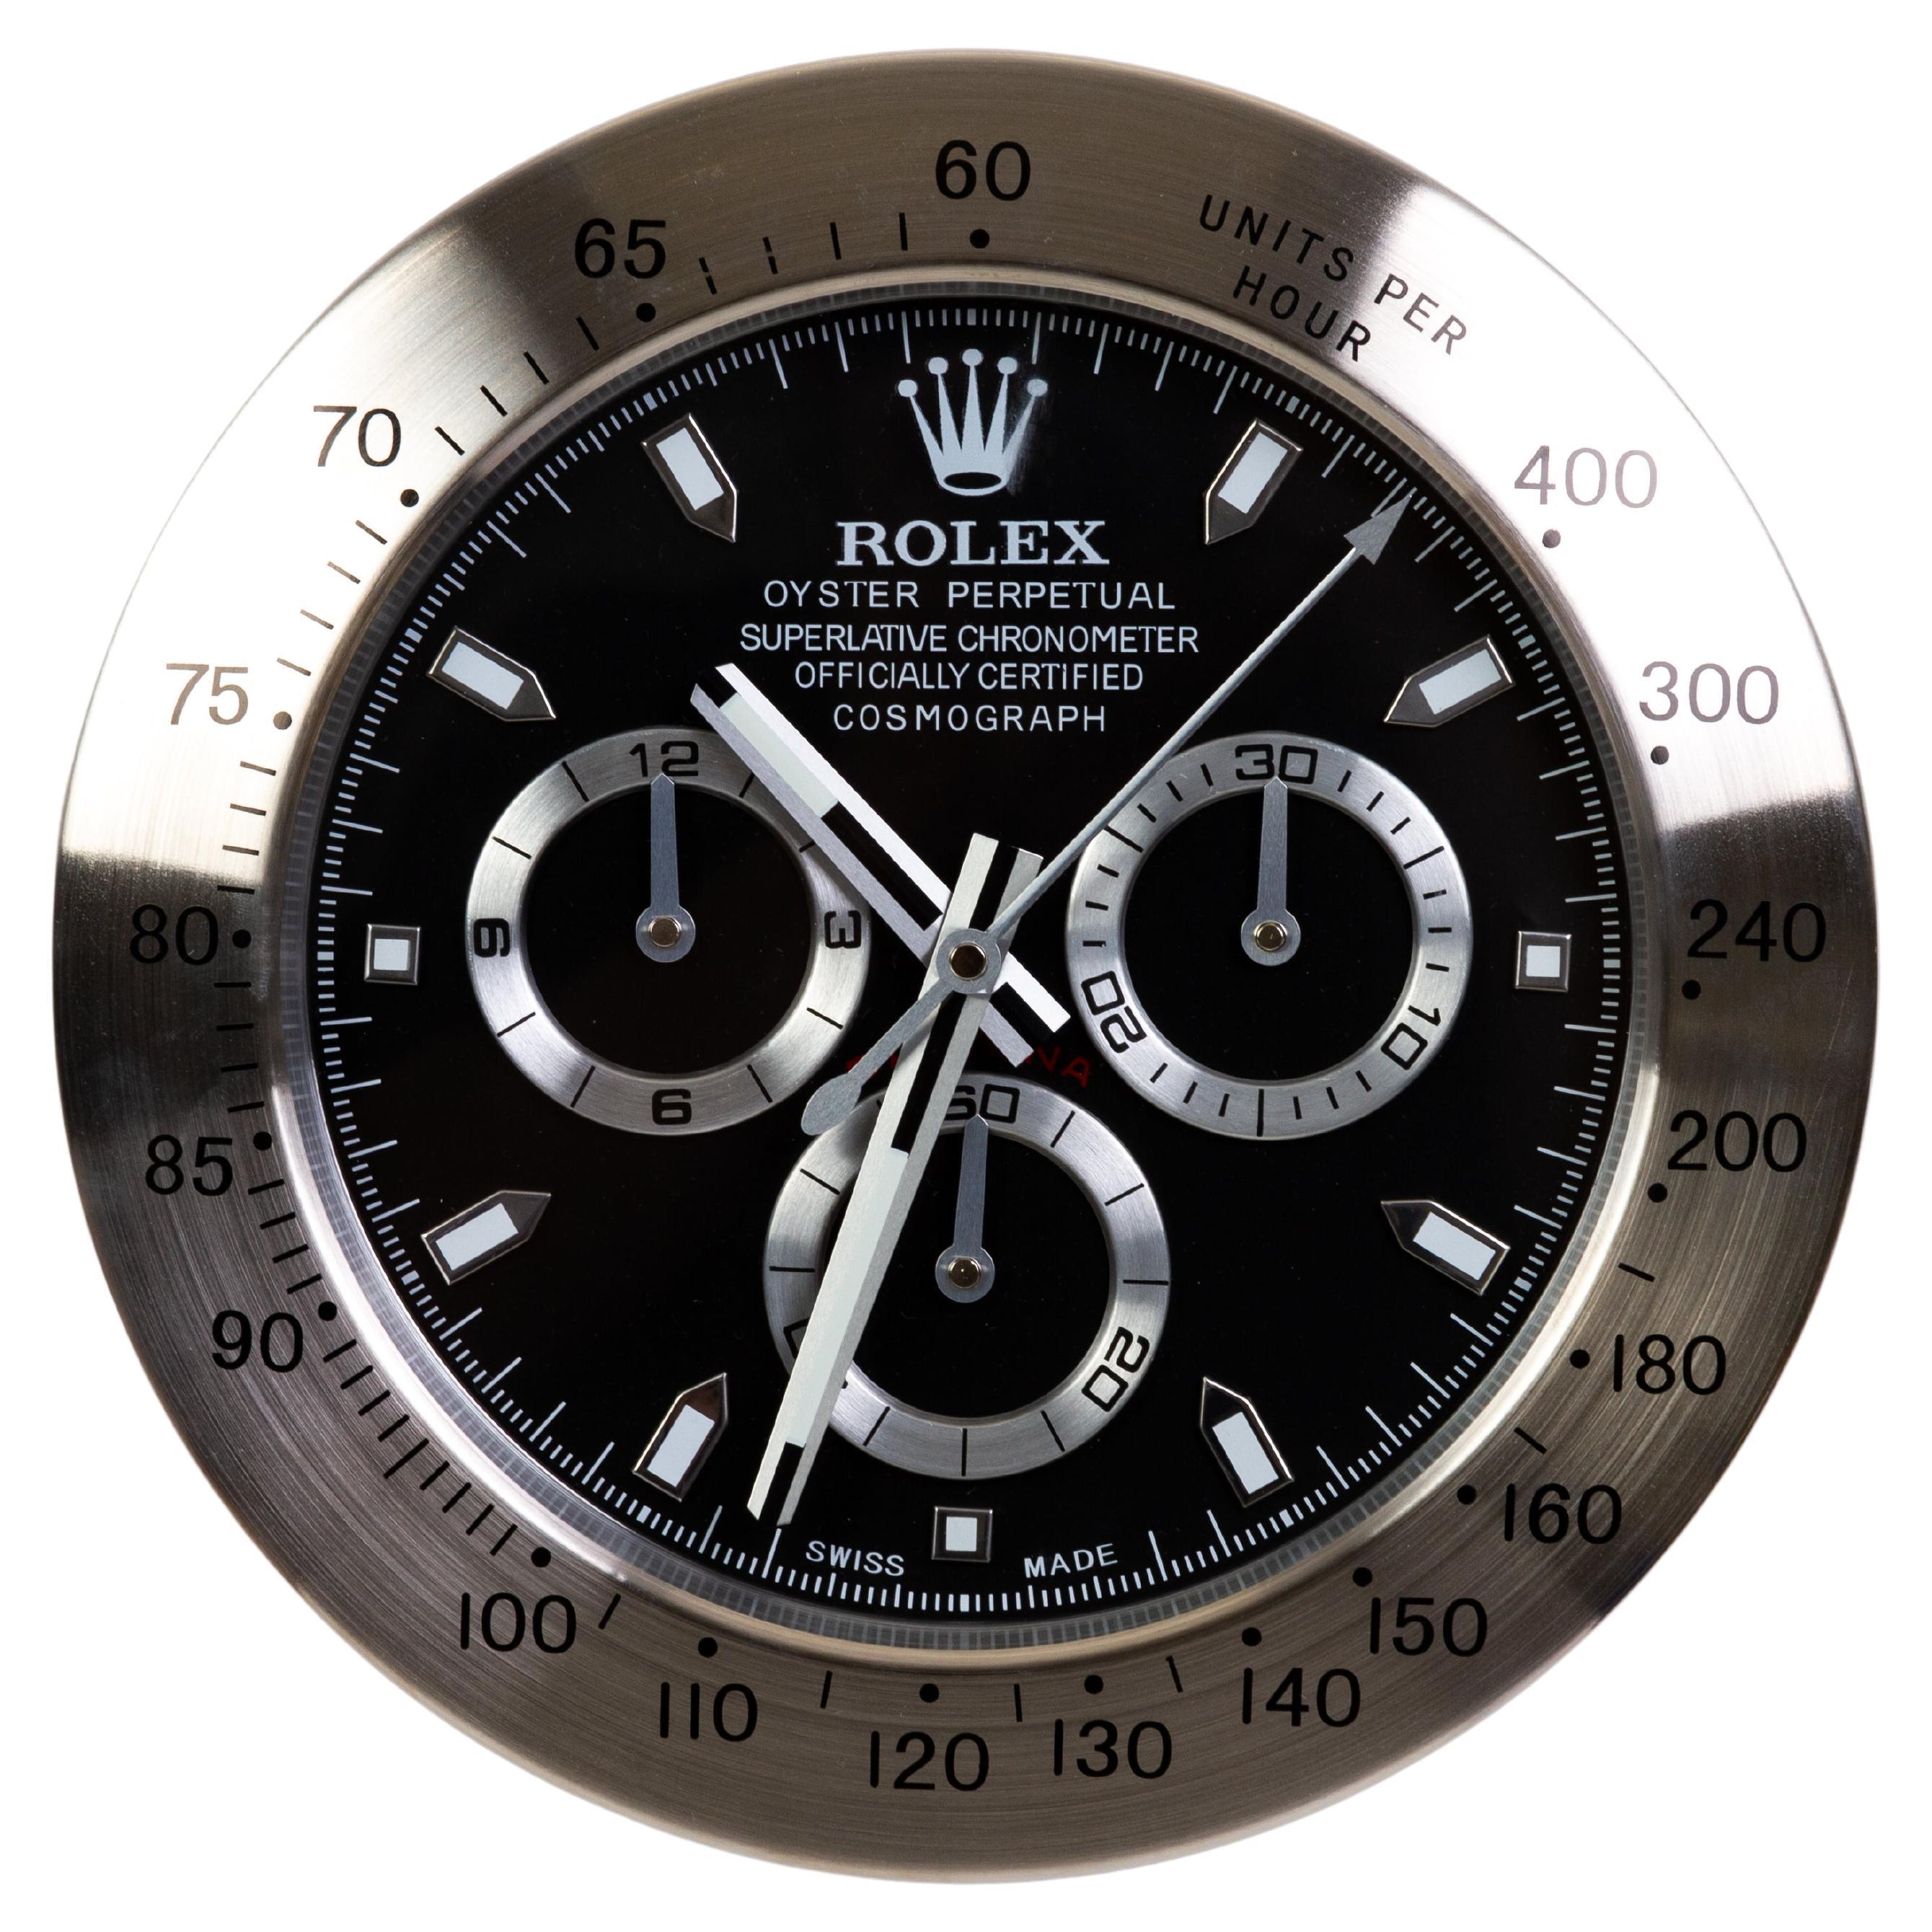 Horloge murale Cosmographe Oyster Perpetual certifiée officiellement ROLEX  sur 1stDibs | horloge murale rolex, horloge mural rolex